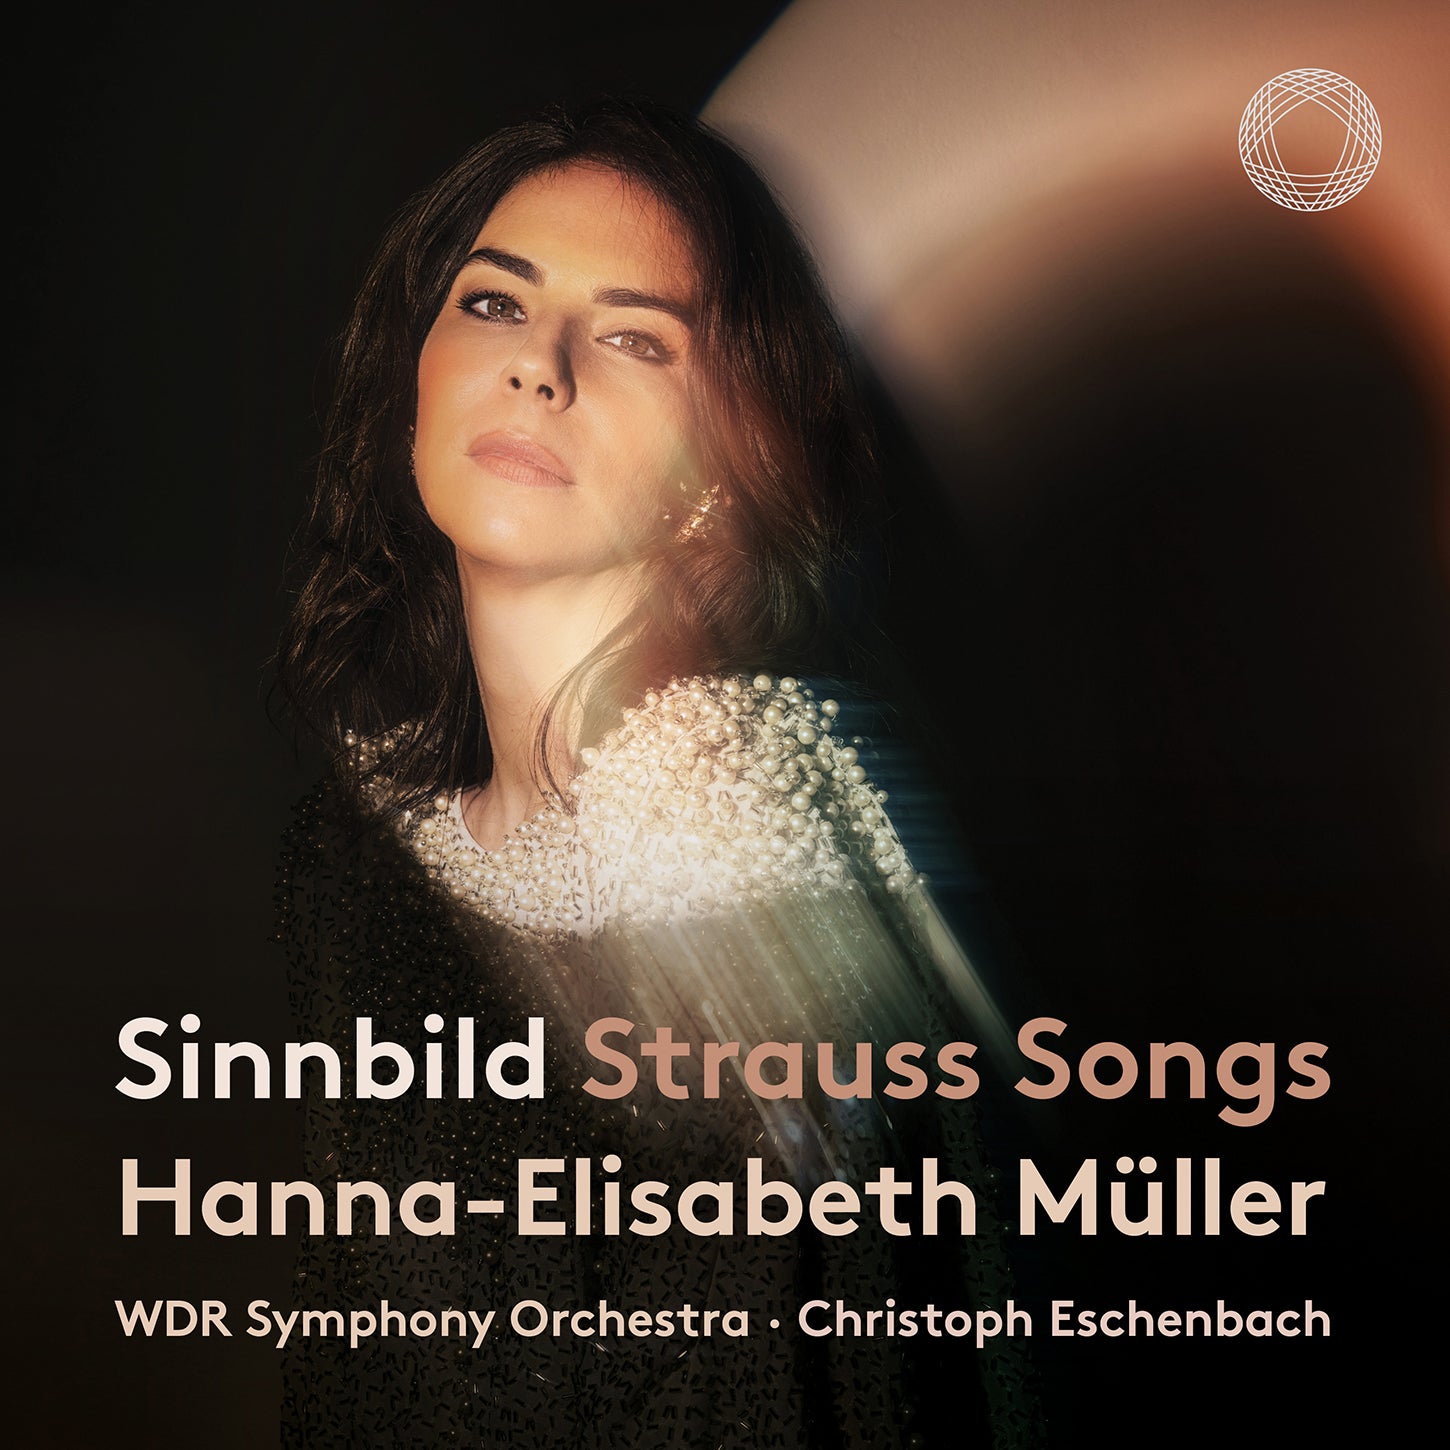 R. Strauss: Sinnbild - Orchestral Songs / H.-E. Müller, Eschenbach, WDR Symphony Orchestra